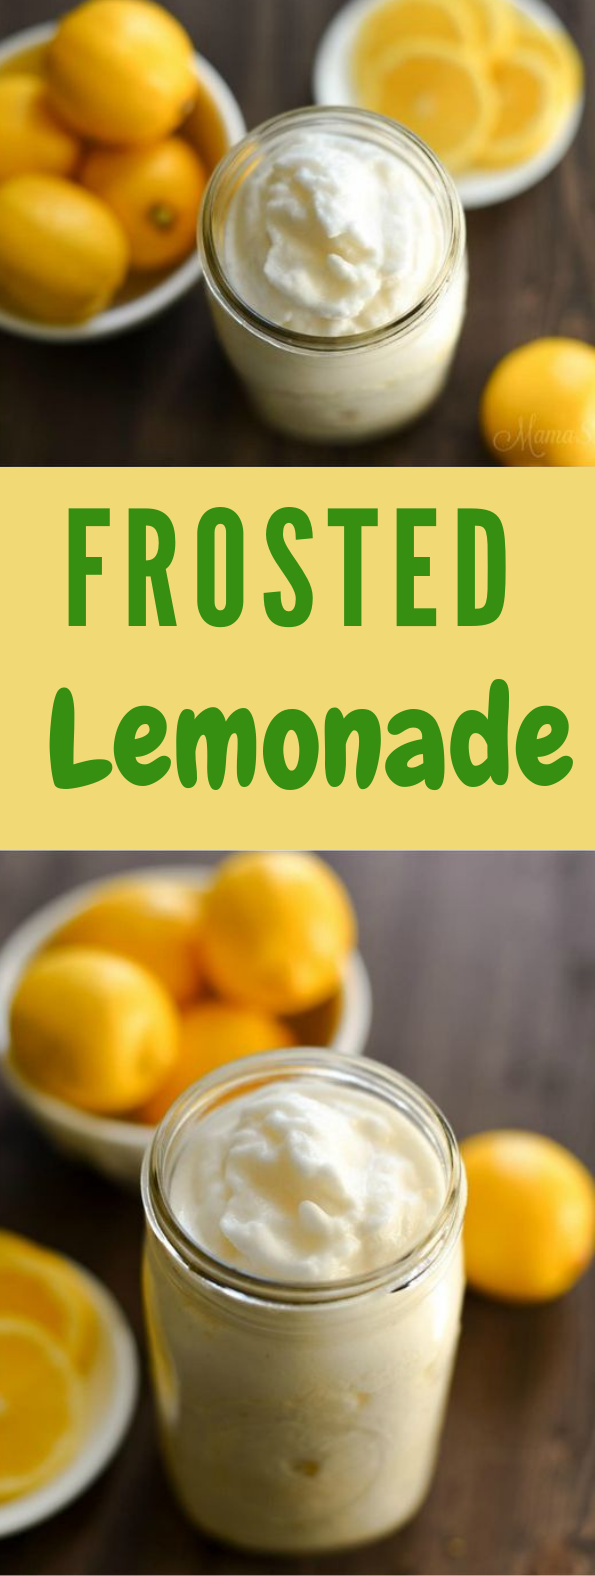 Frosted Lemonade #healthydrink #lemonade